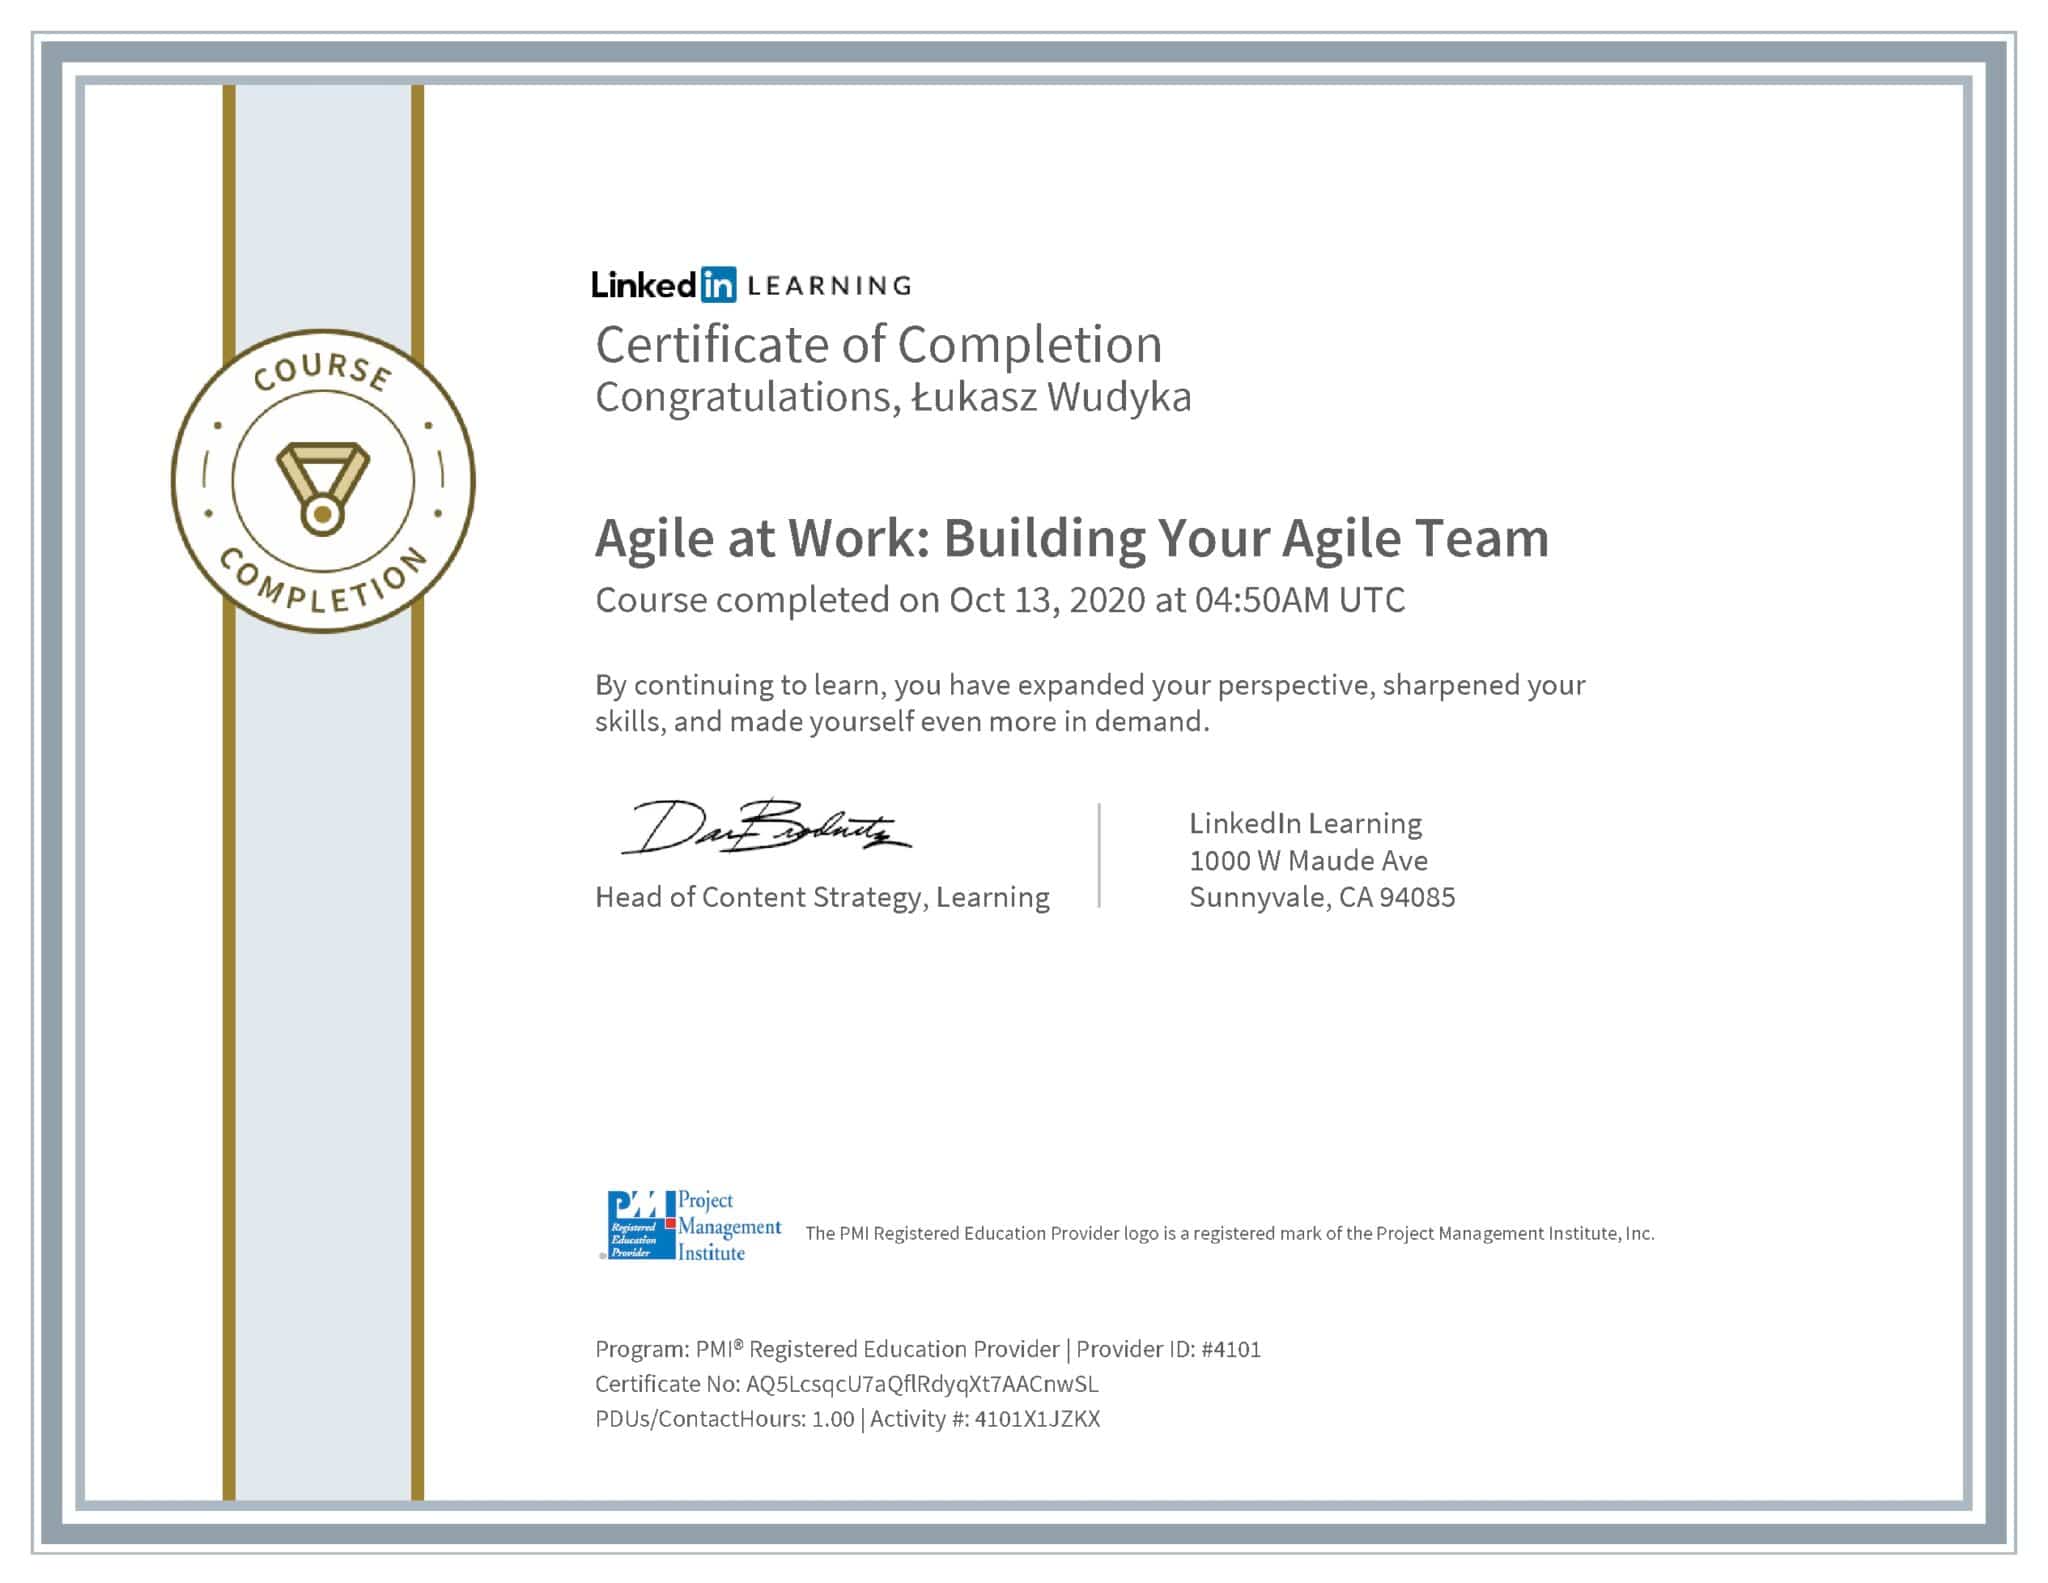 Łukasz Wudyka certyfikat LinkedIn Agile at Work: Building Your Agile Team PMI